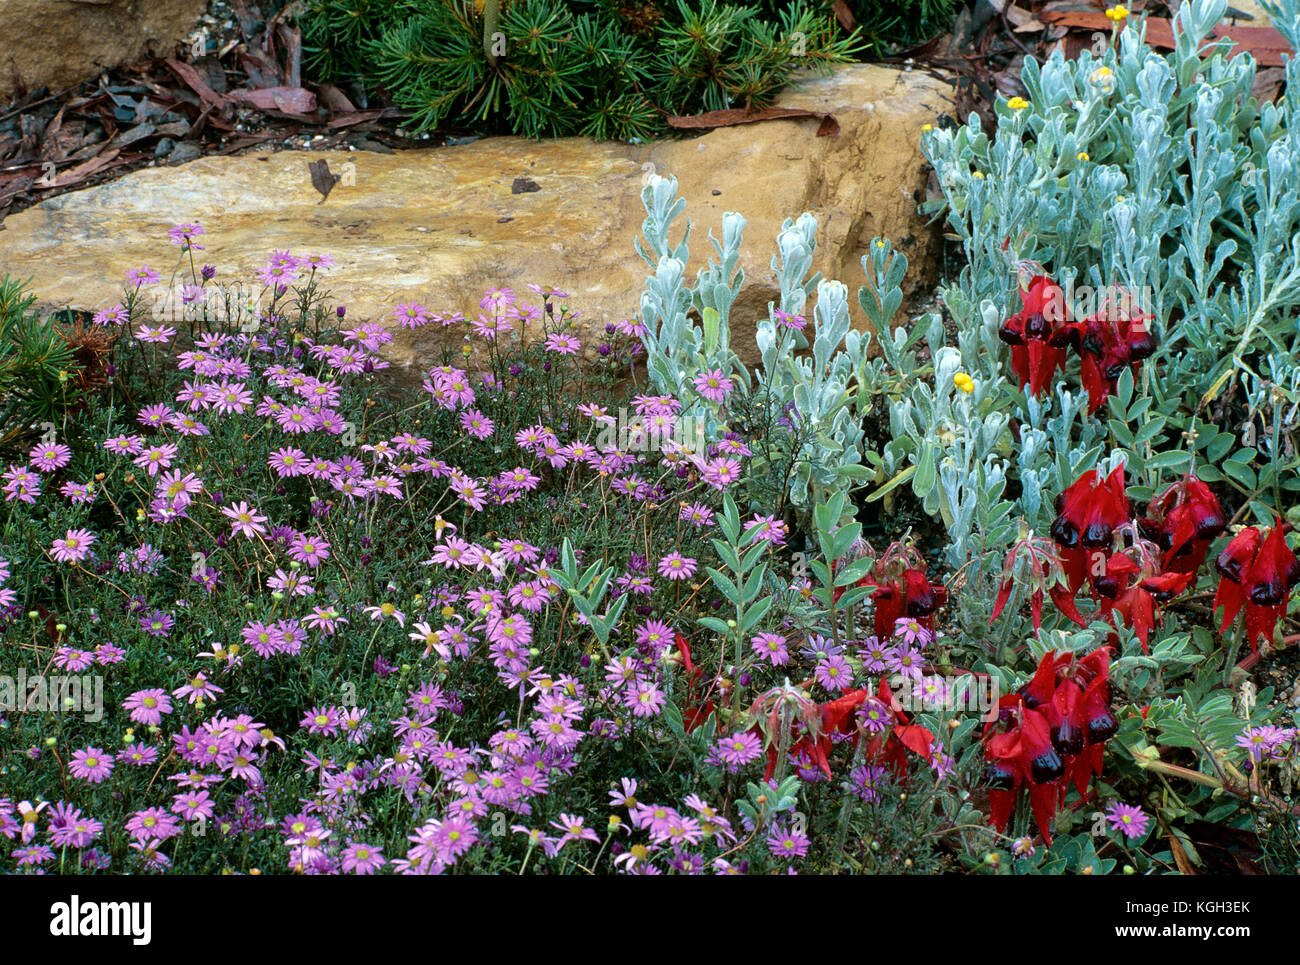 Sturt’s desert pea (Swainsona formosa), and Brachycome, in Australian rock garden. Australia Stock Photo